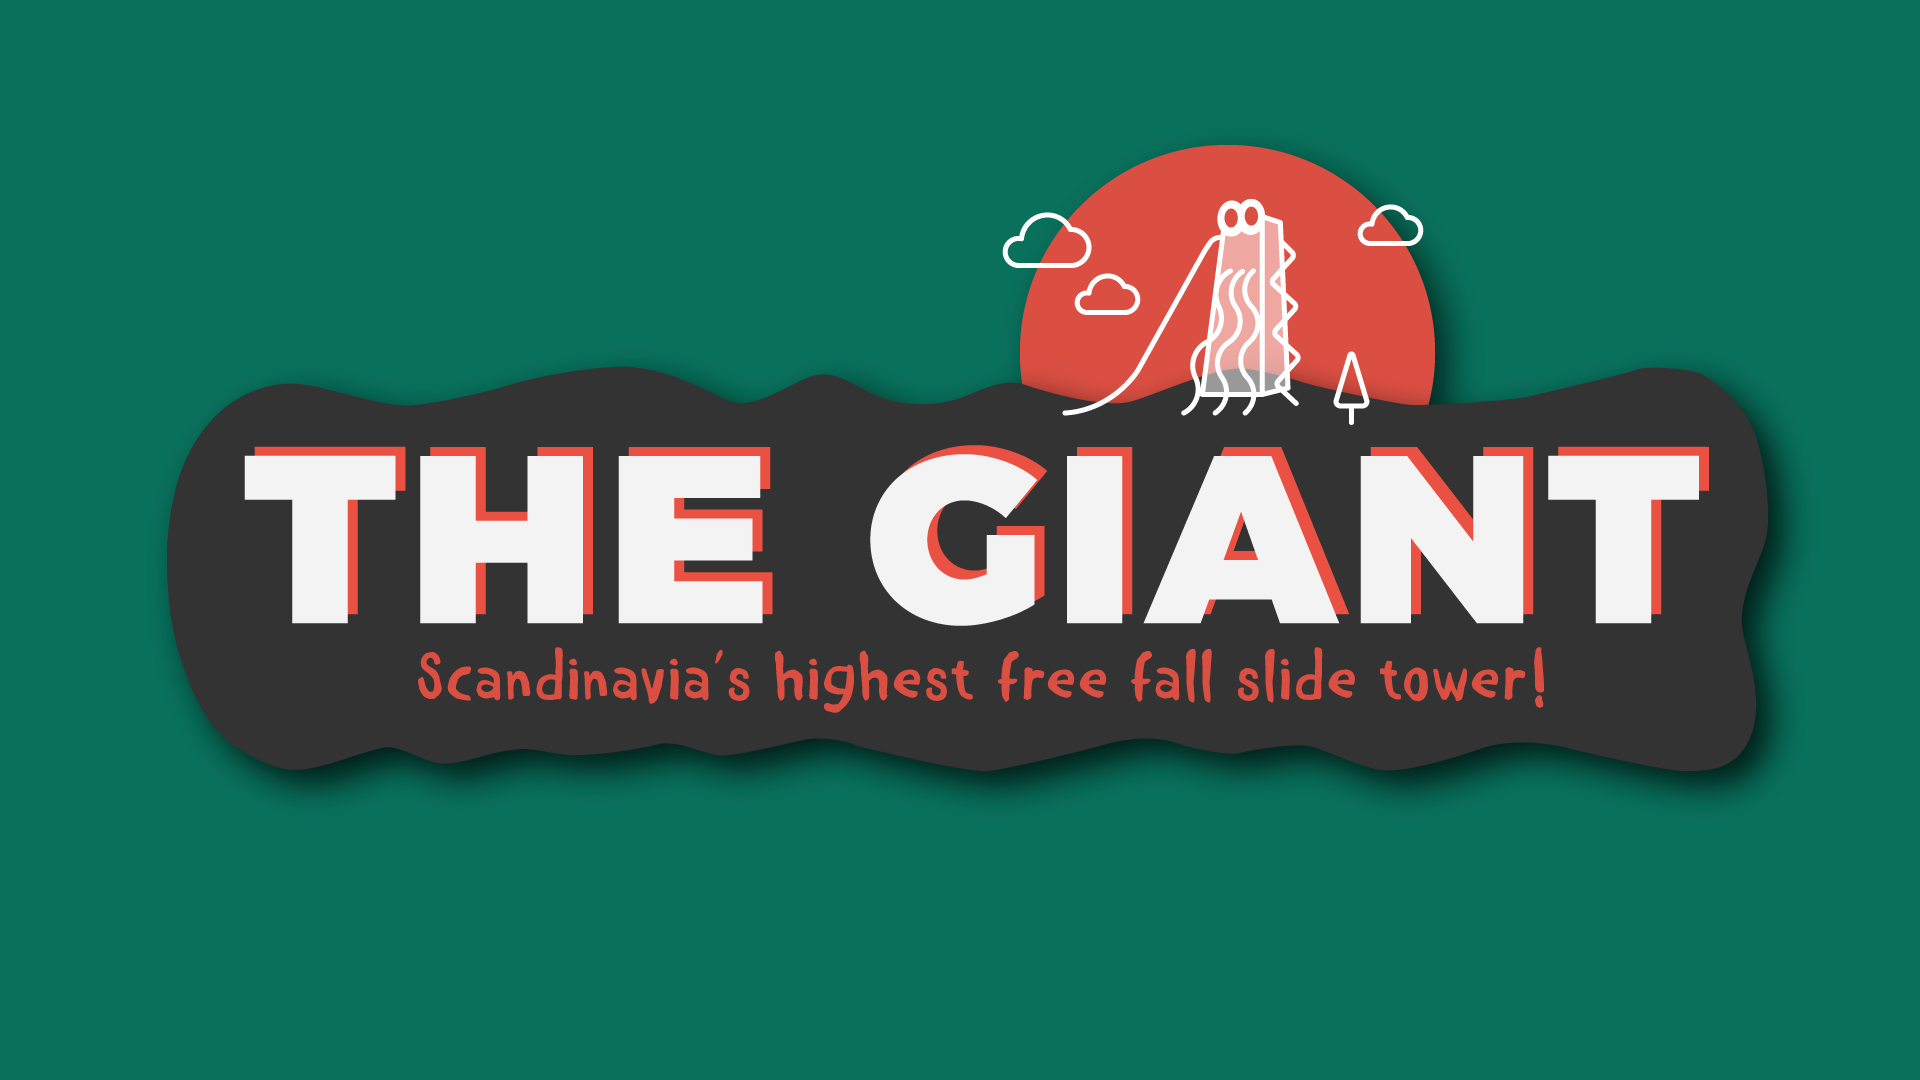 Scandinavia's highest free fall slide tower